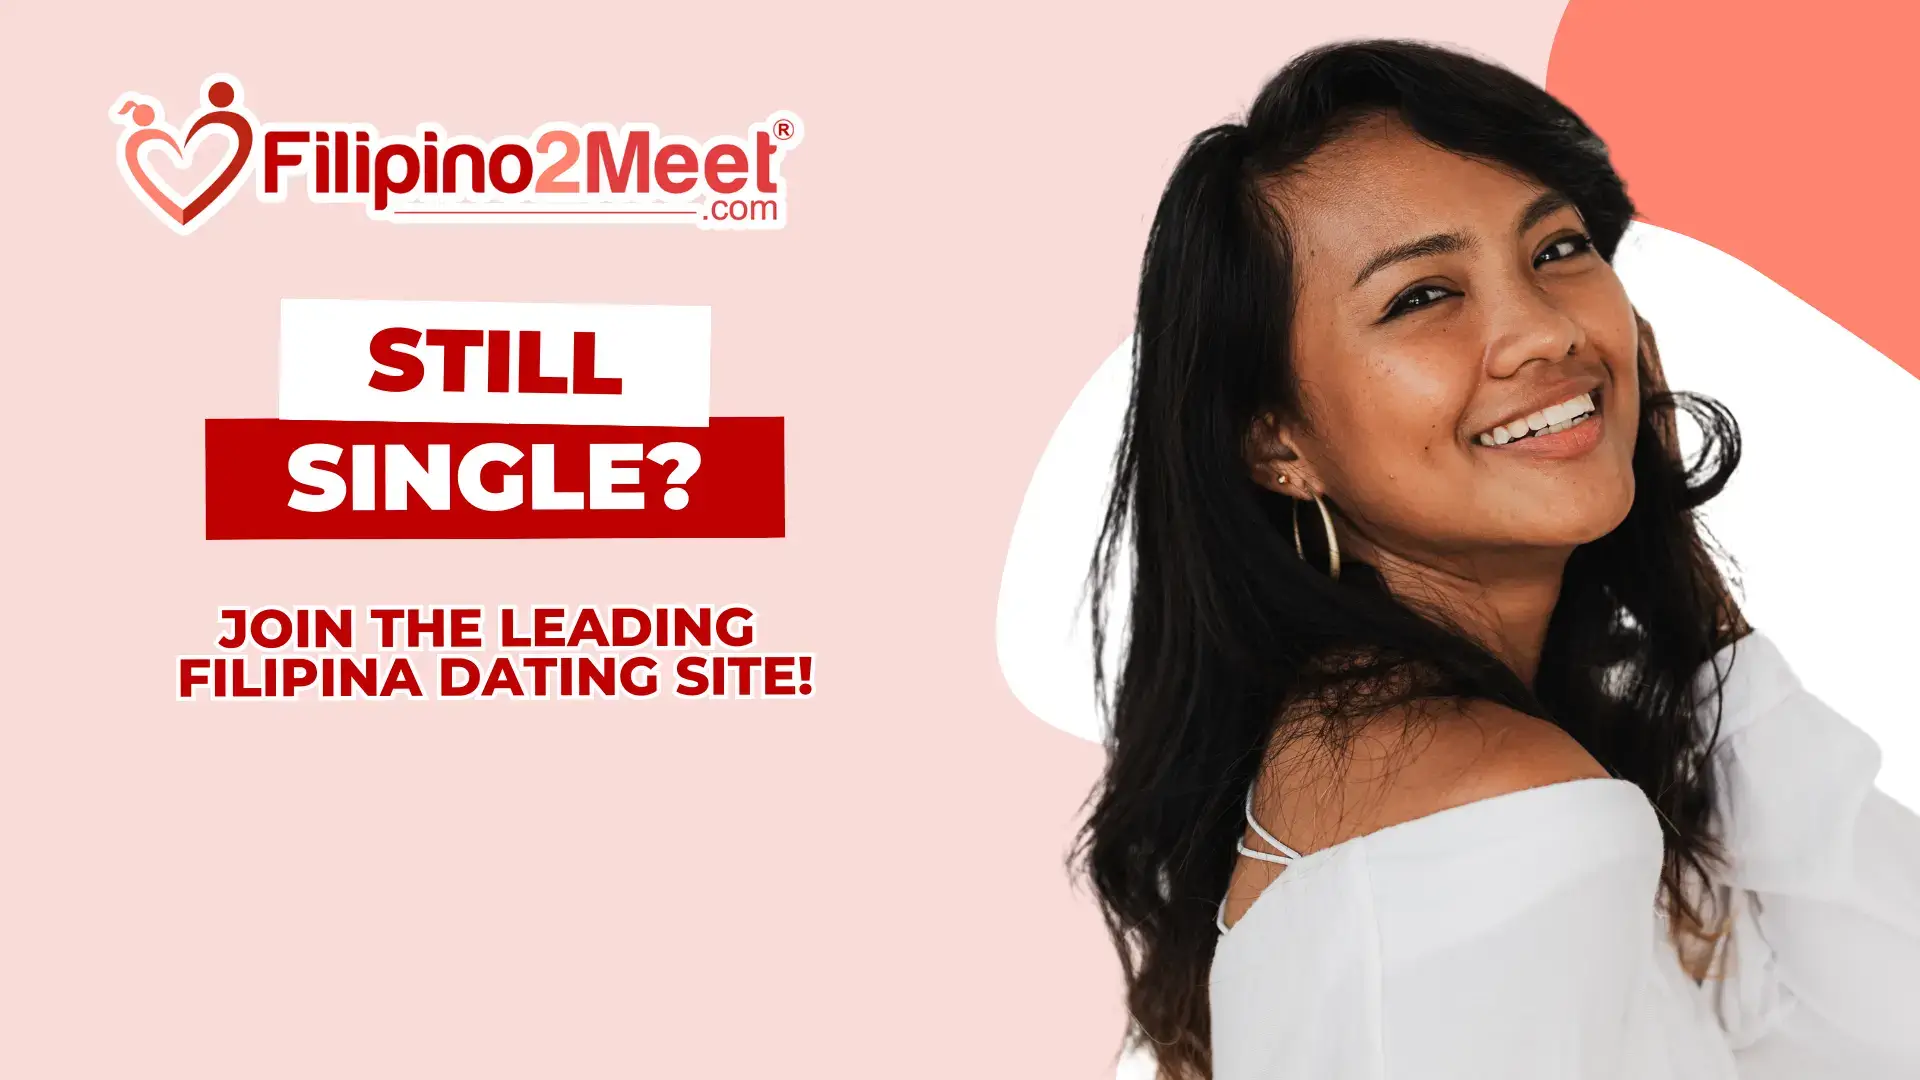 Filipina Dating - Filipinos2Meet - Free Philippines Dating